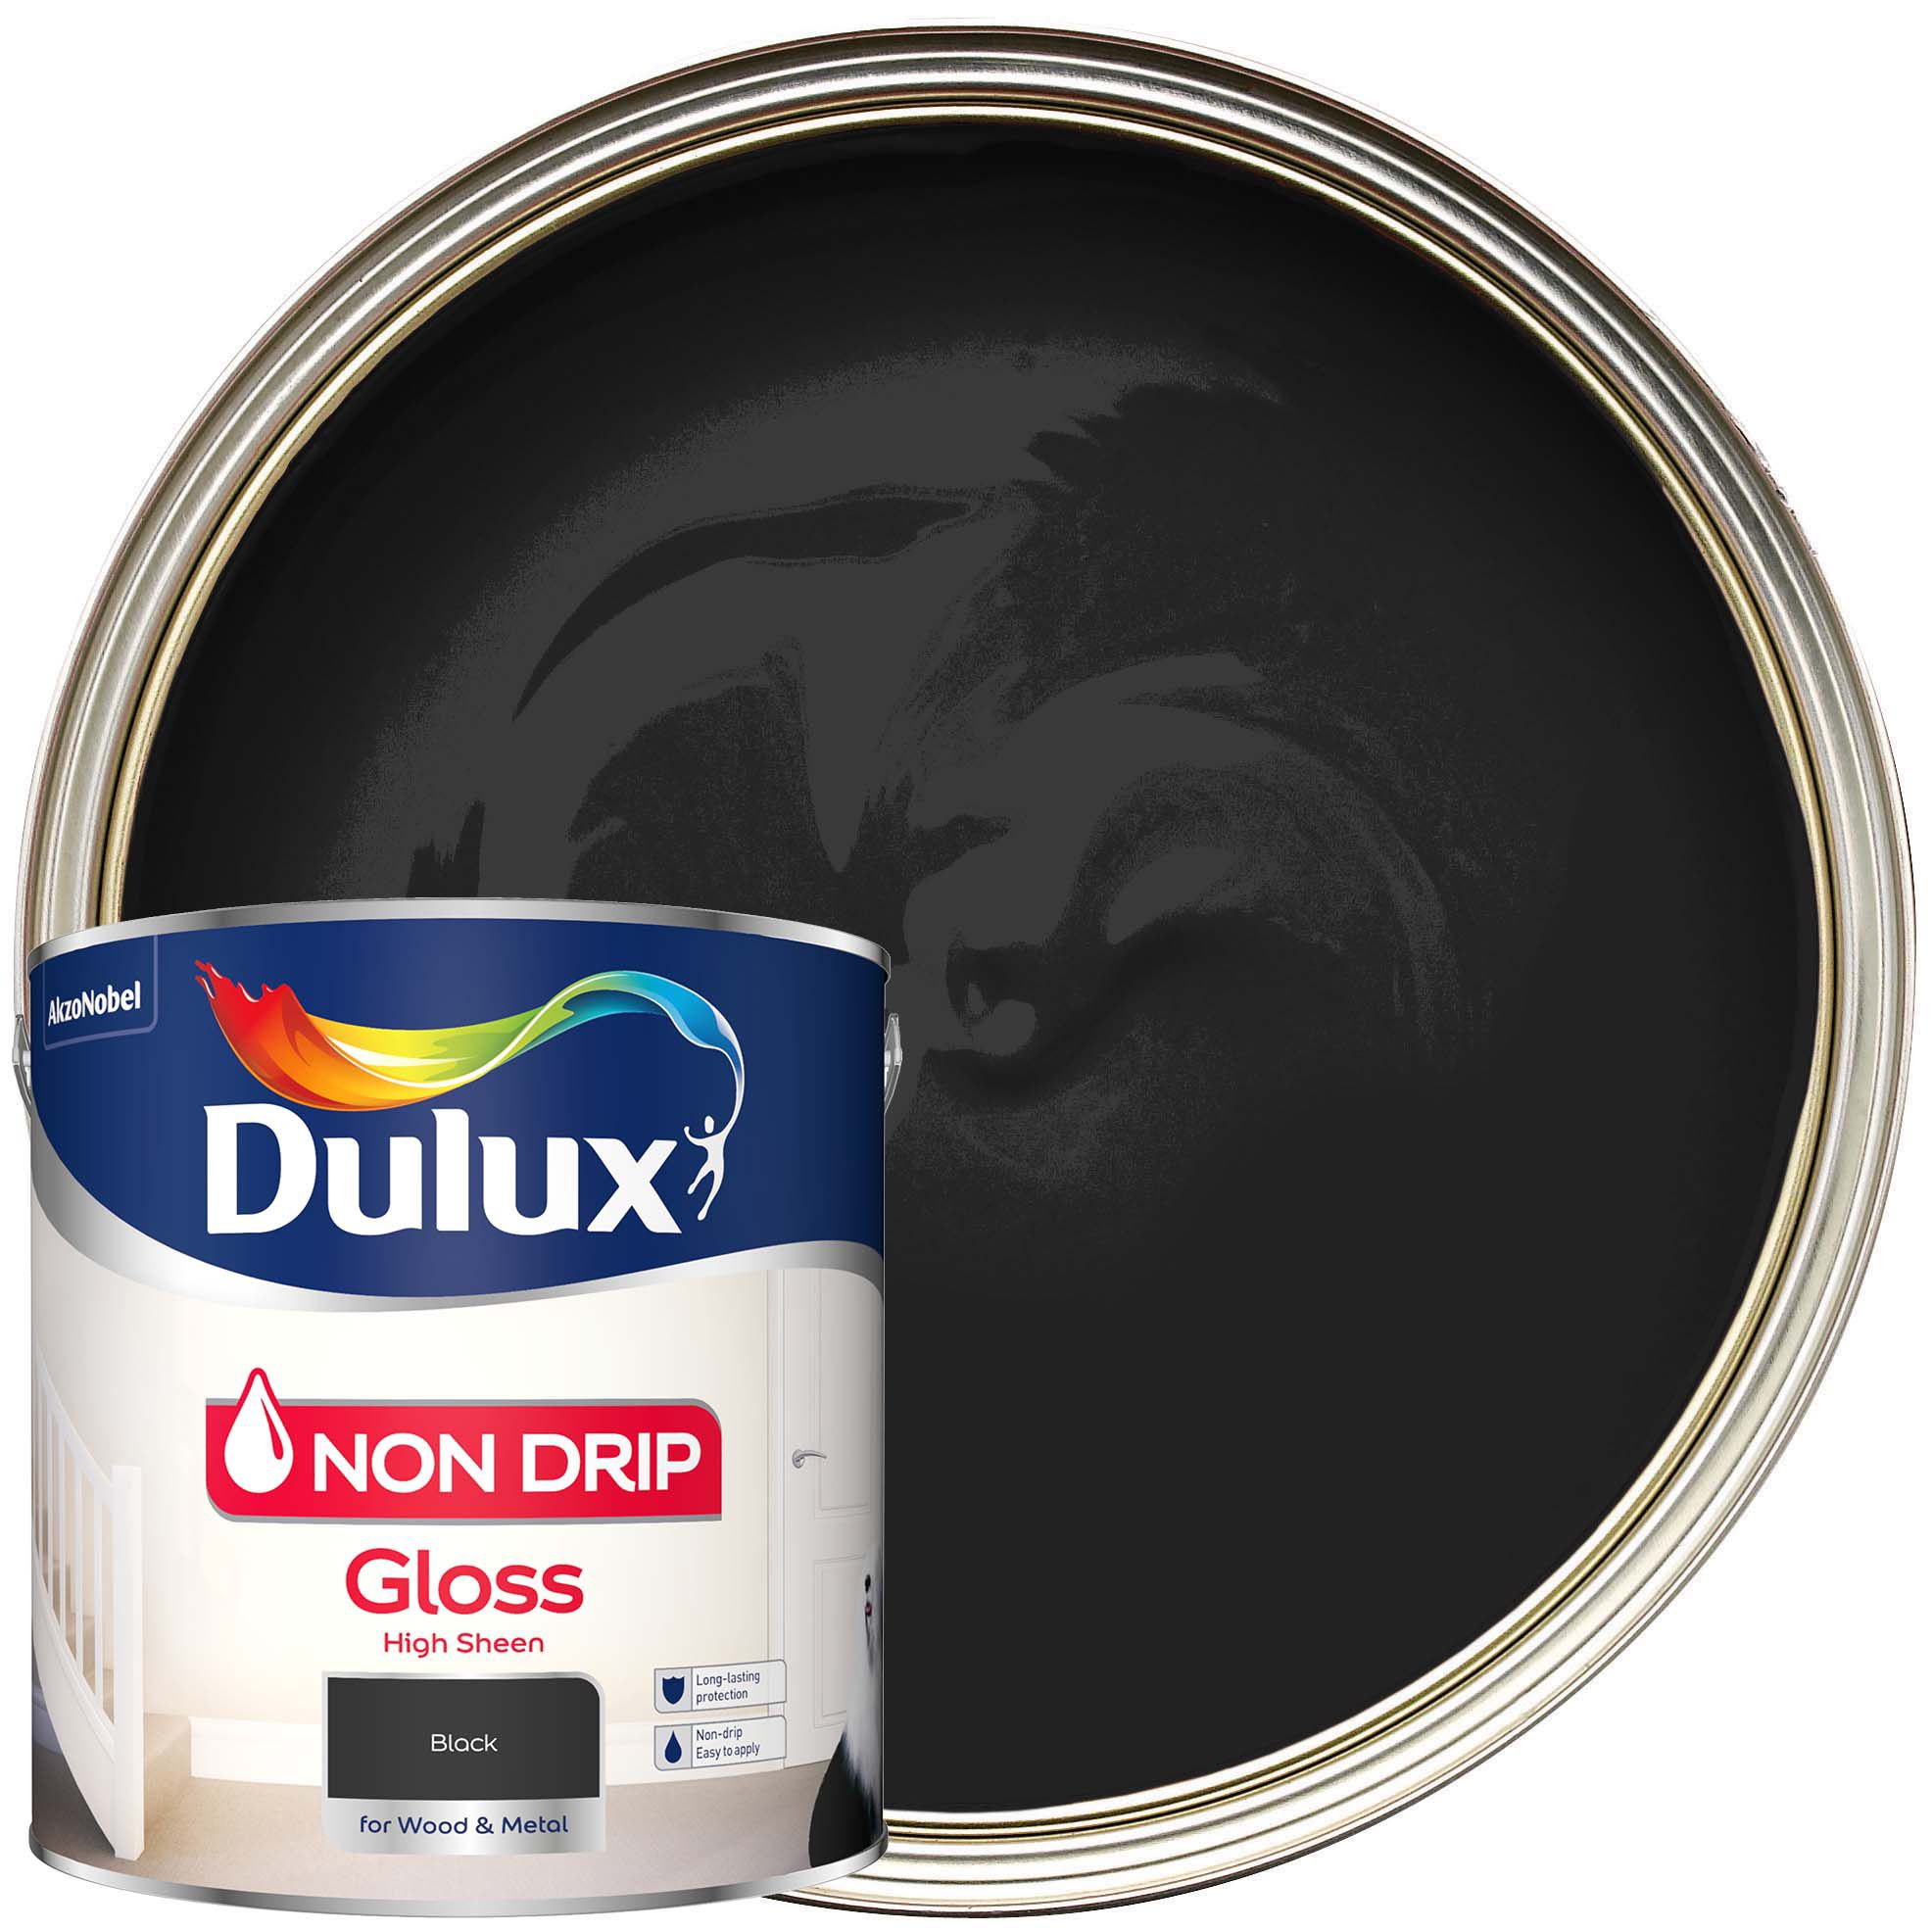 Dulux Non Drip Gloss Paint - Black - 2.5L